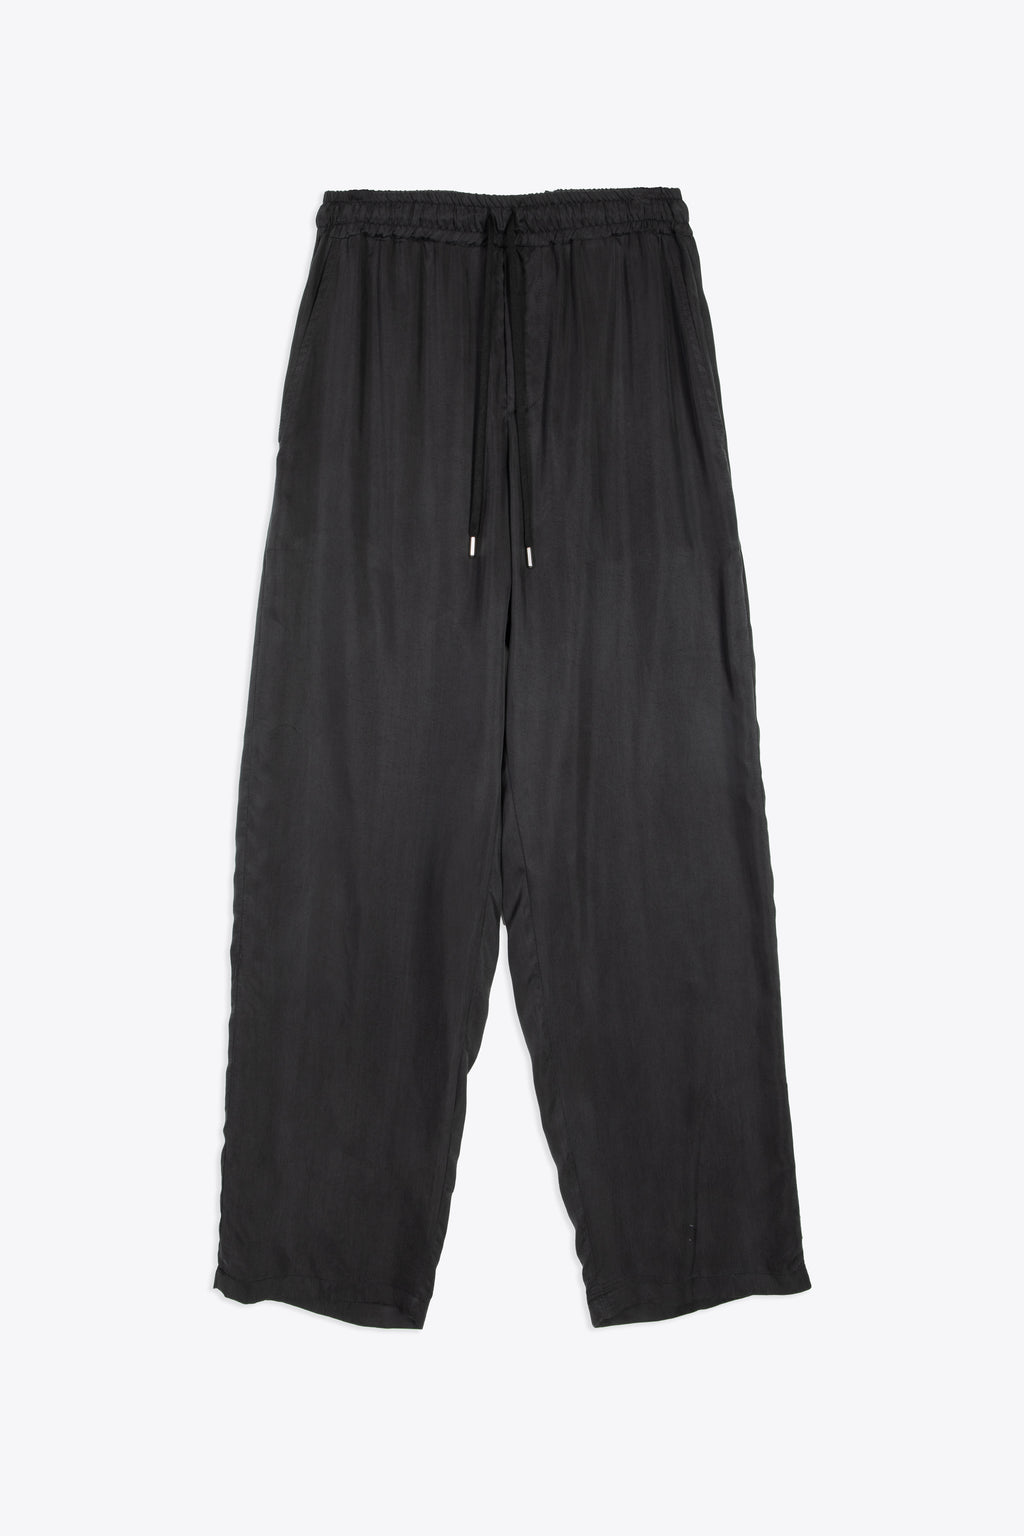 alt-image__Black-cupro-loose-fit-drawstring-pant---Pajama-Otaru-Trousers